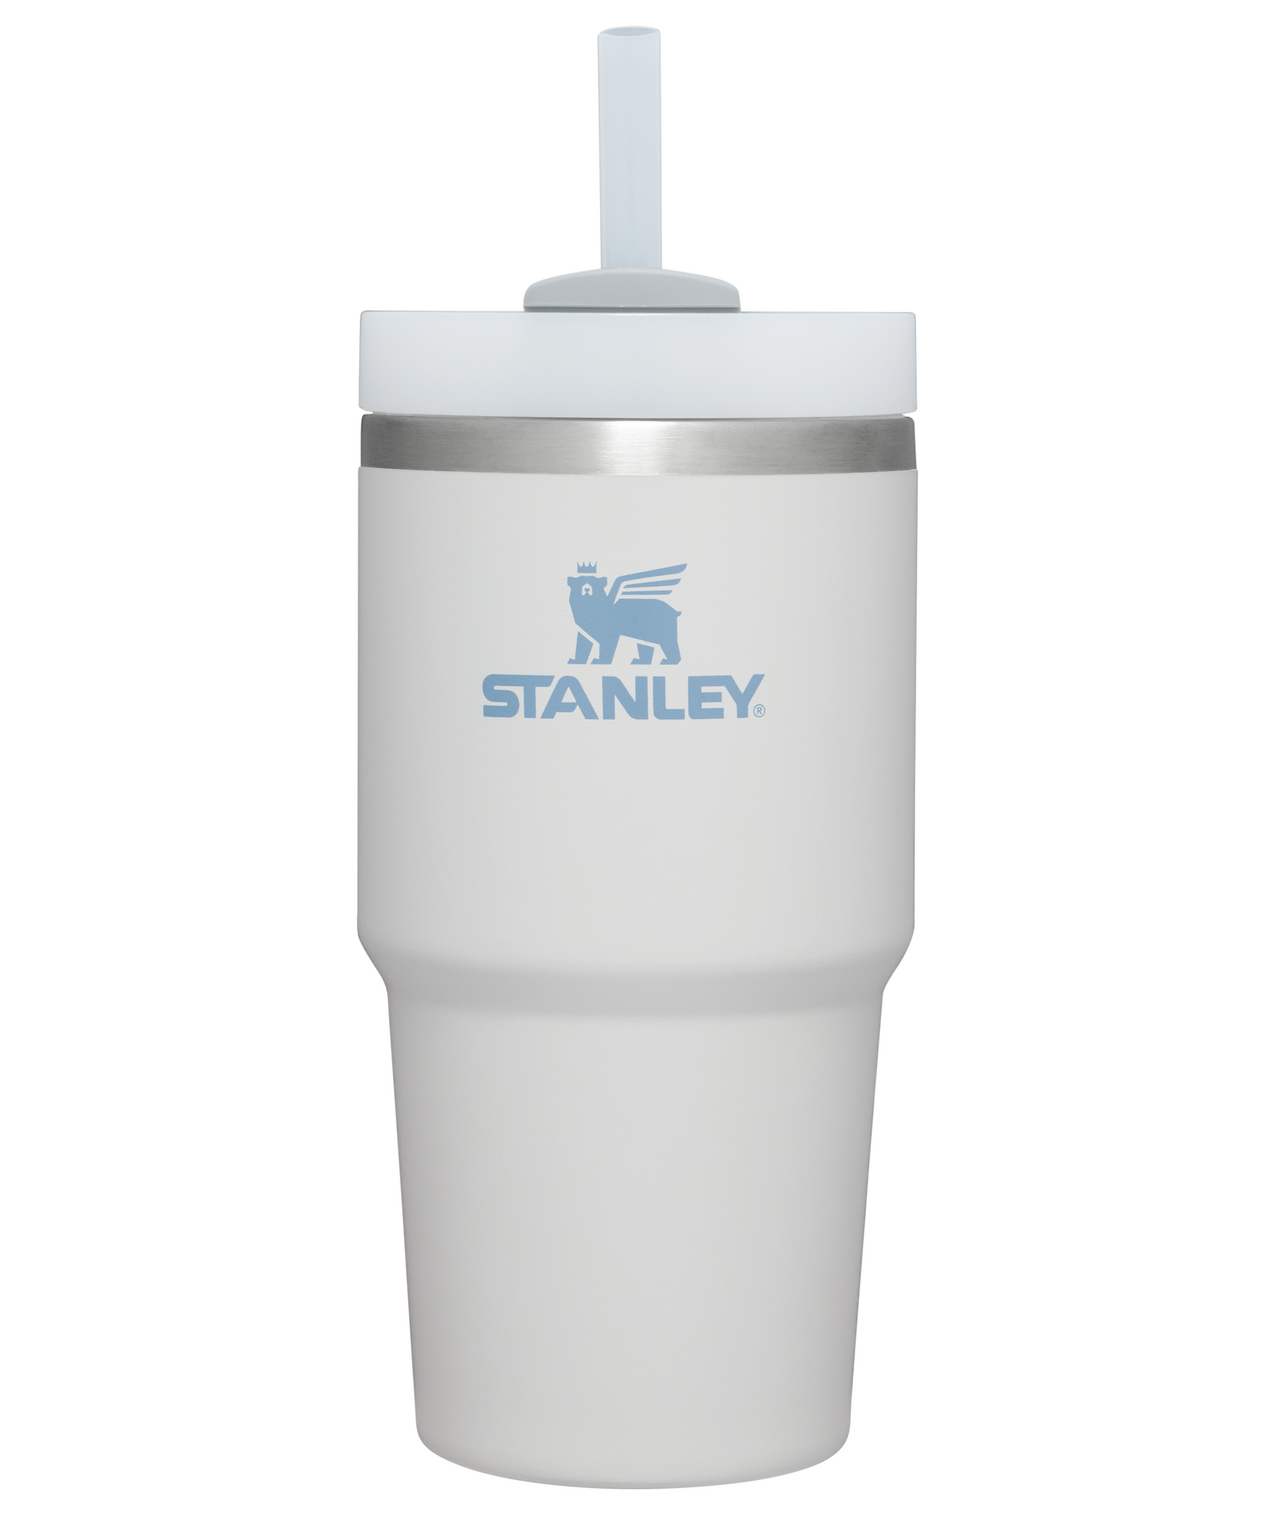 Stanley 40oz Flowstate Quencher Tumbler H2.0 - Cream – American Seasonal  Home